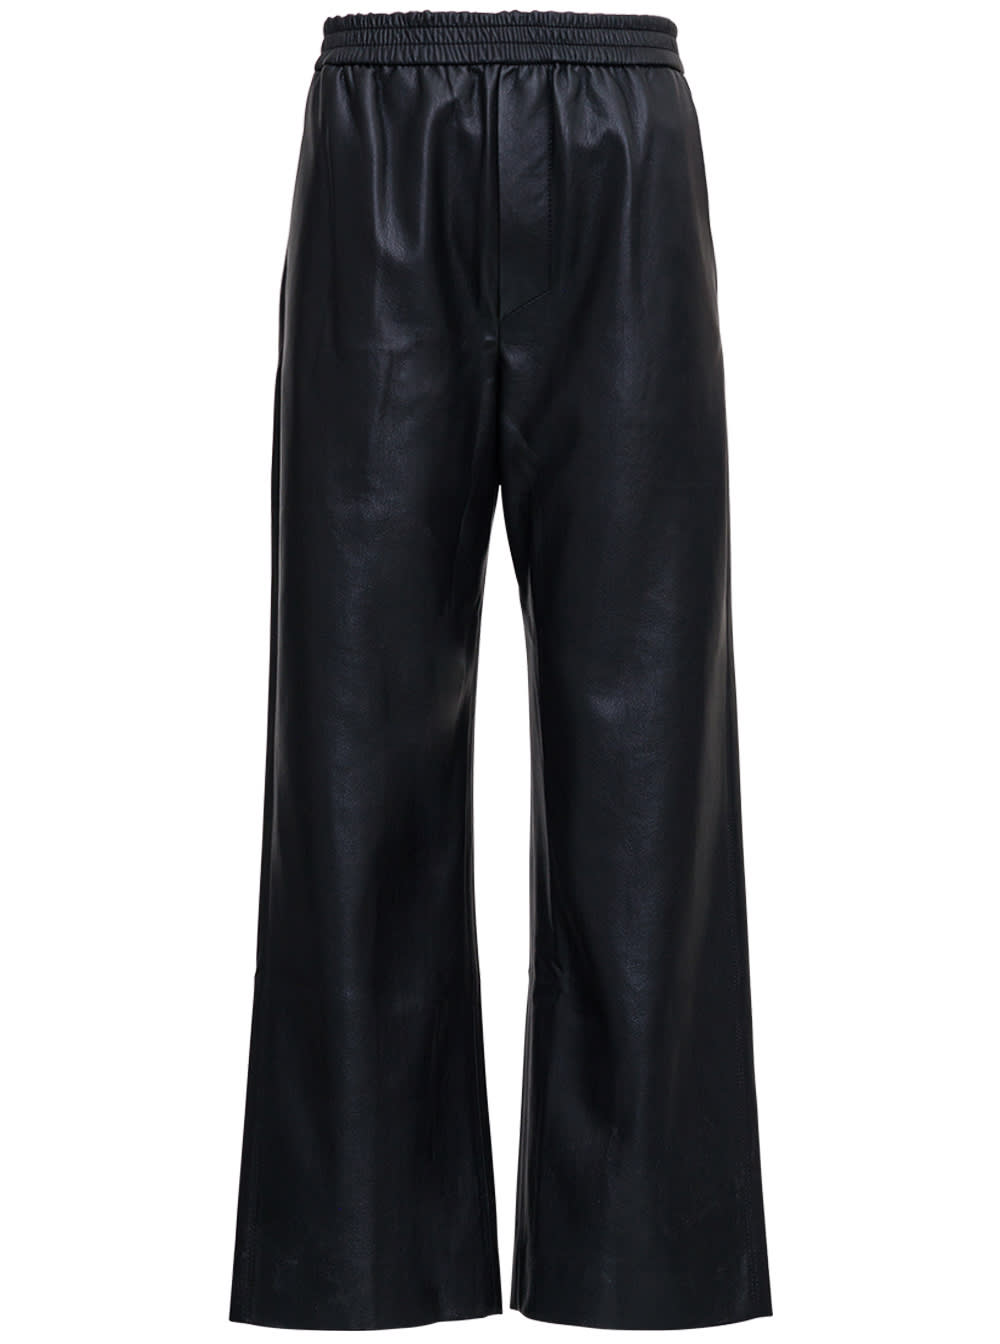 Nanushka Odessa Fake Leather Pants With Elasticated Belt Pants